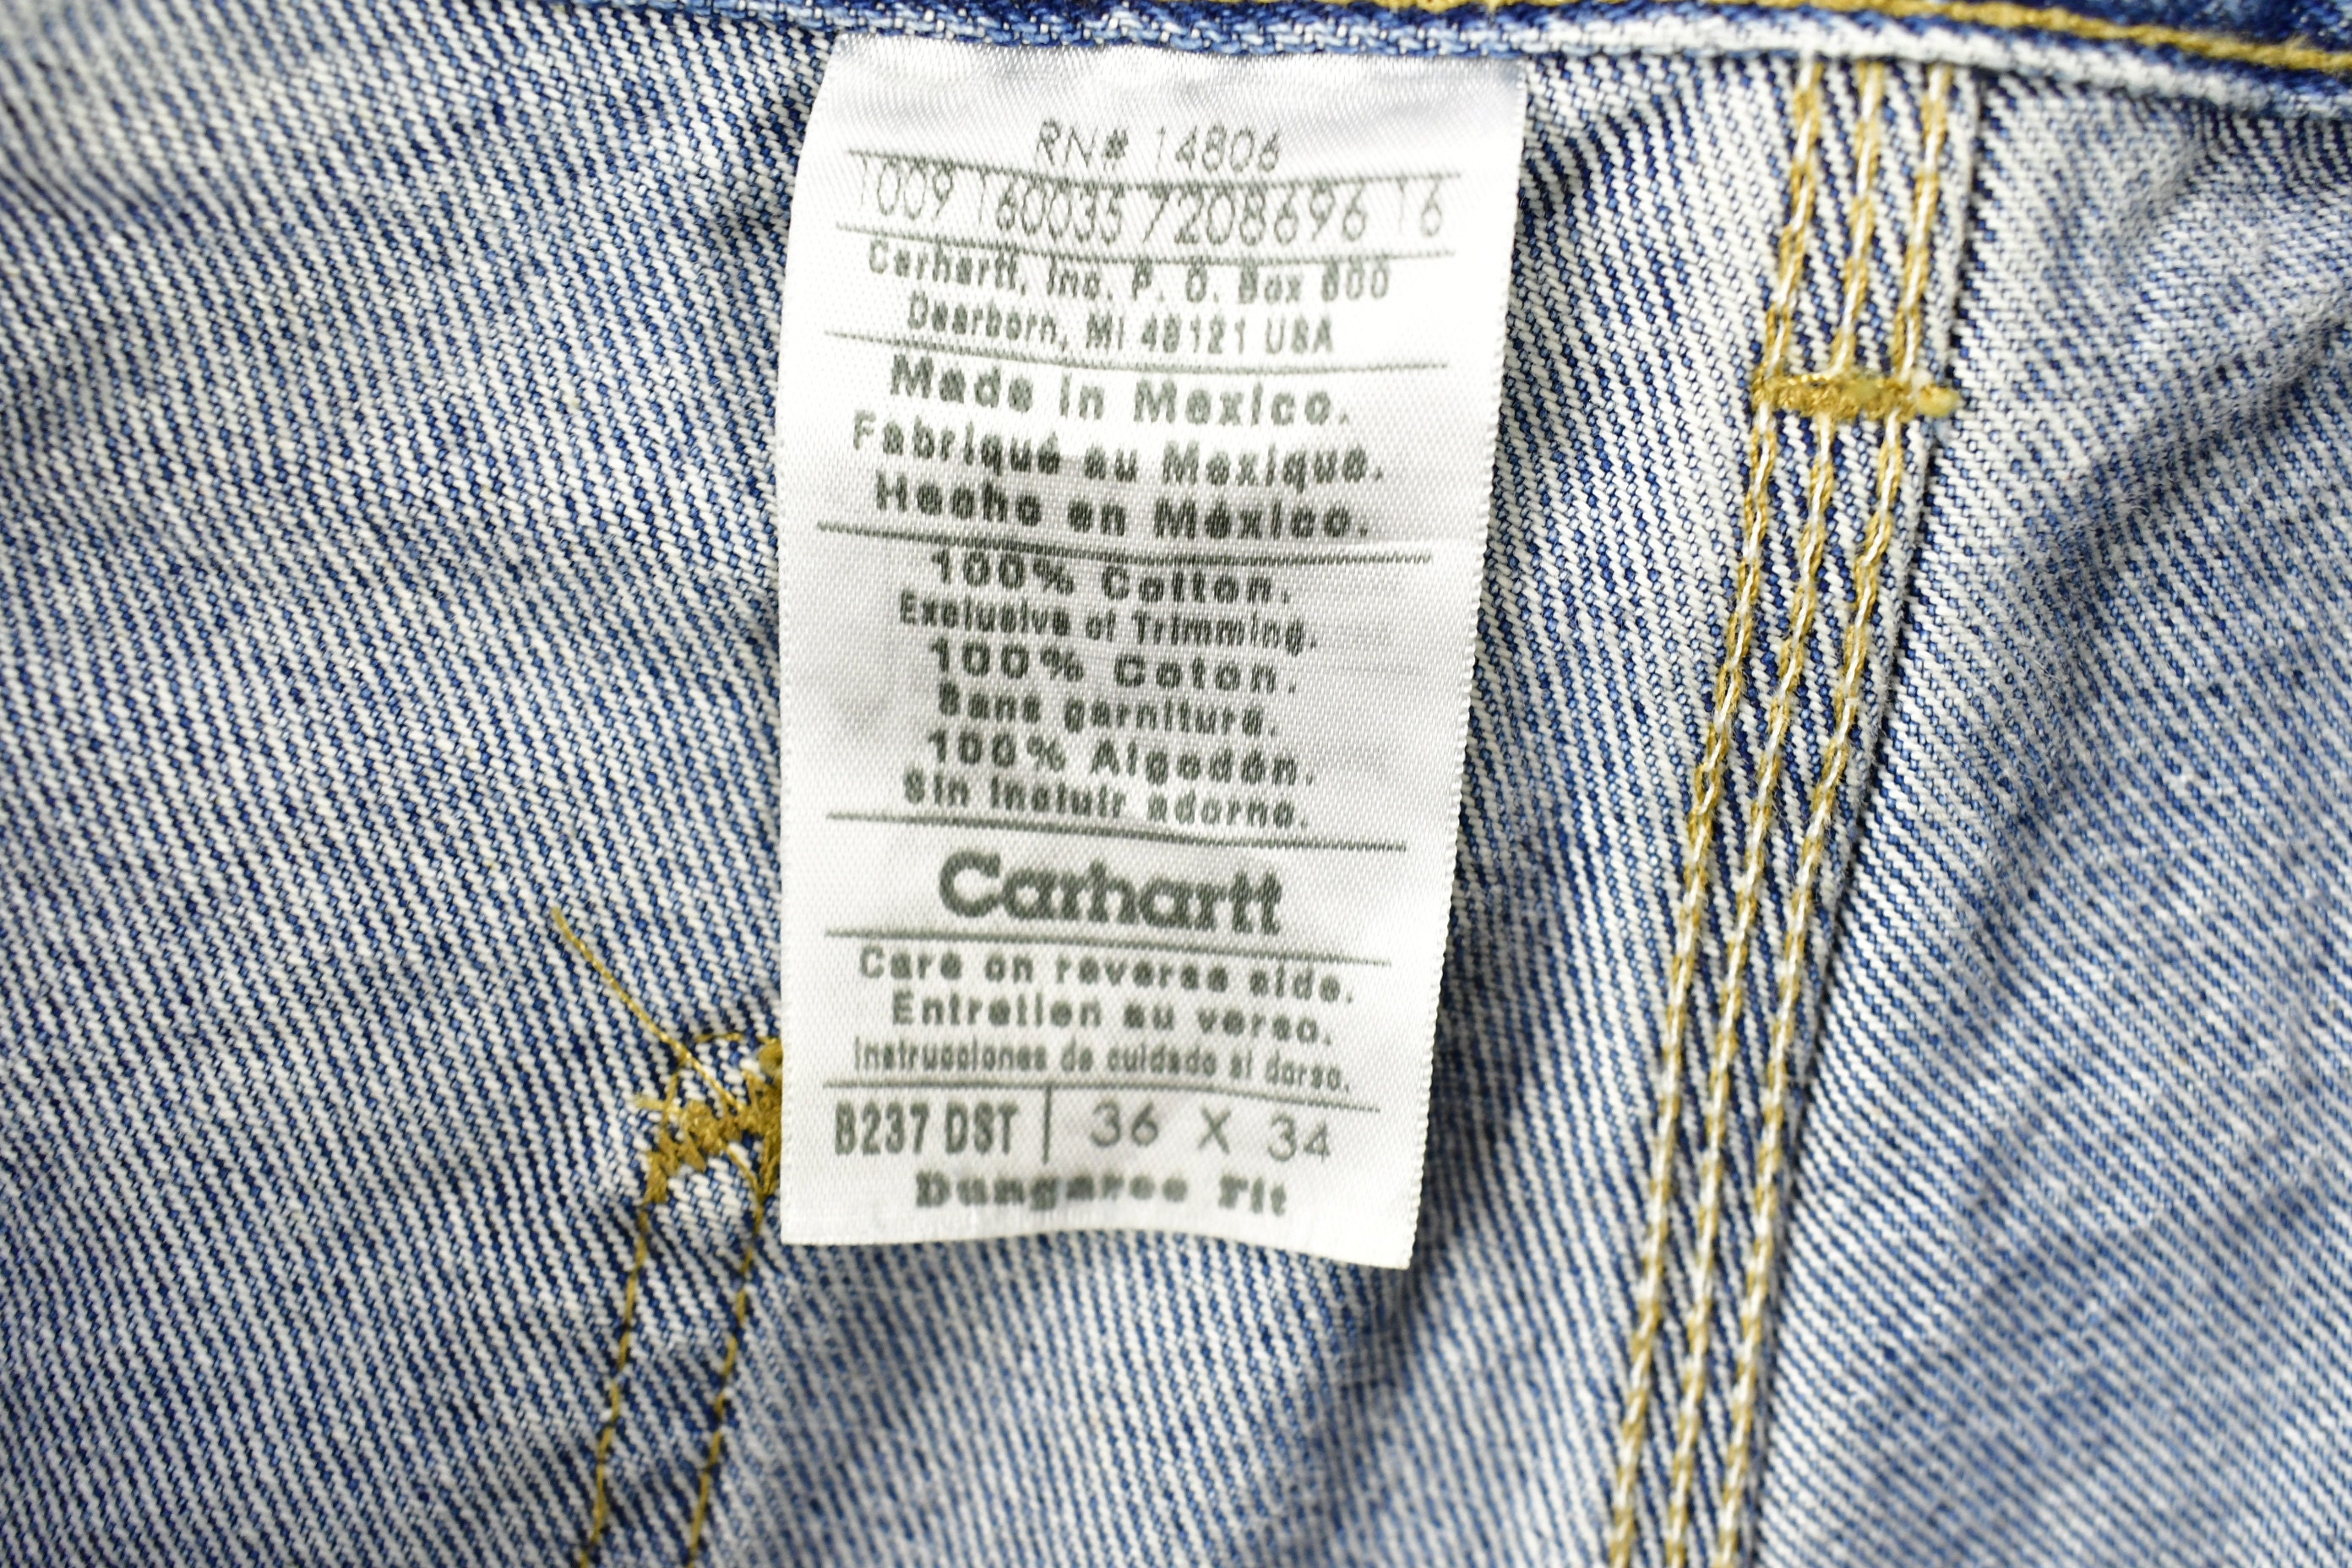 Vintage 1990s Carhartt Denim Work Jeans Size 36 X 34 / 90s Carpenter Pants  / Dungaree Fit / Distressed Carhartt / Vintage Workwear 